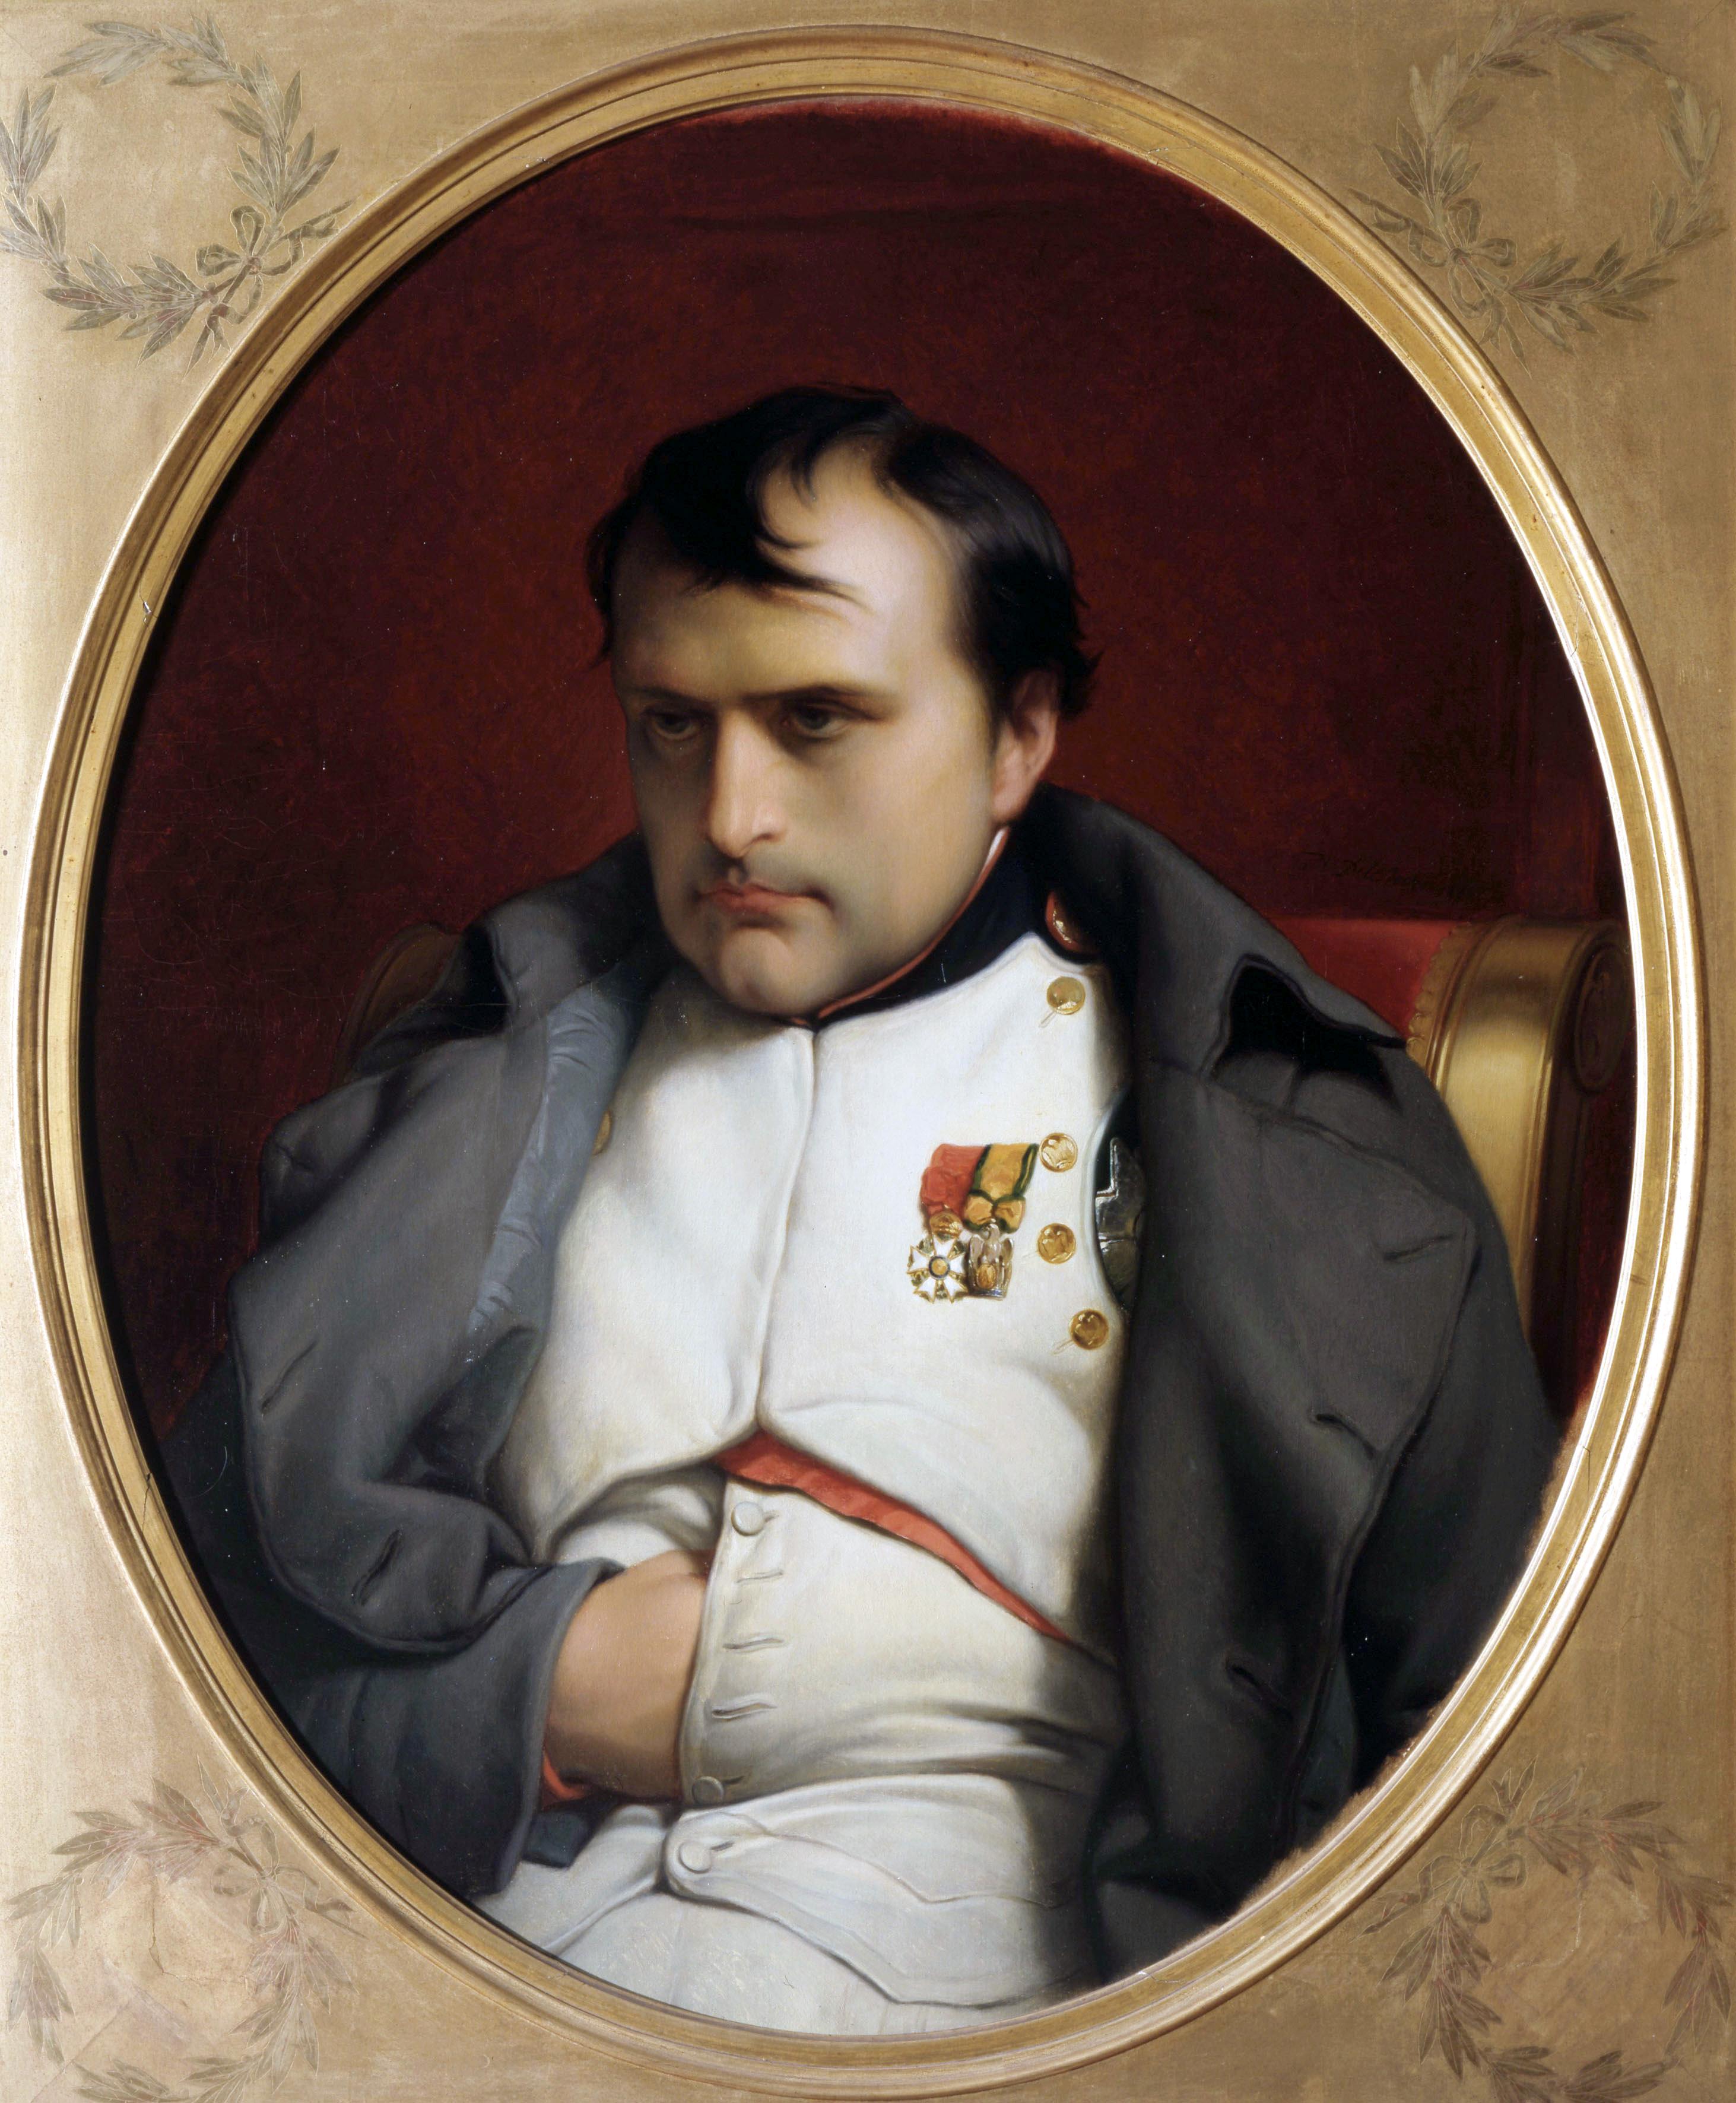 Napoleon brooding